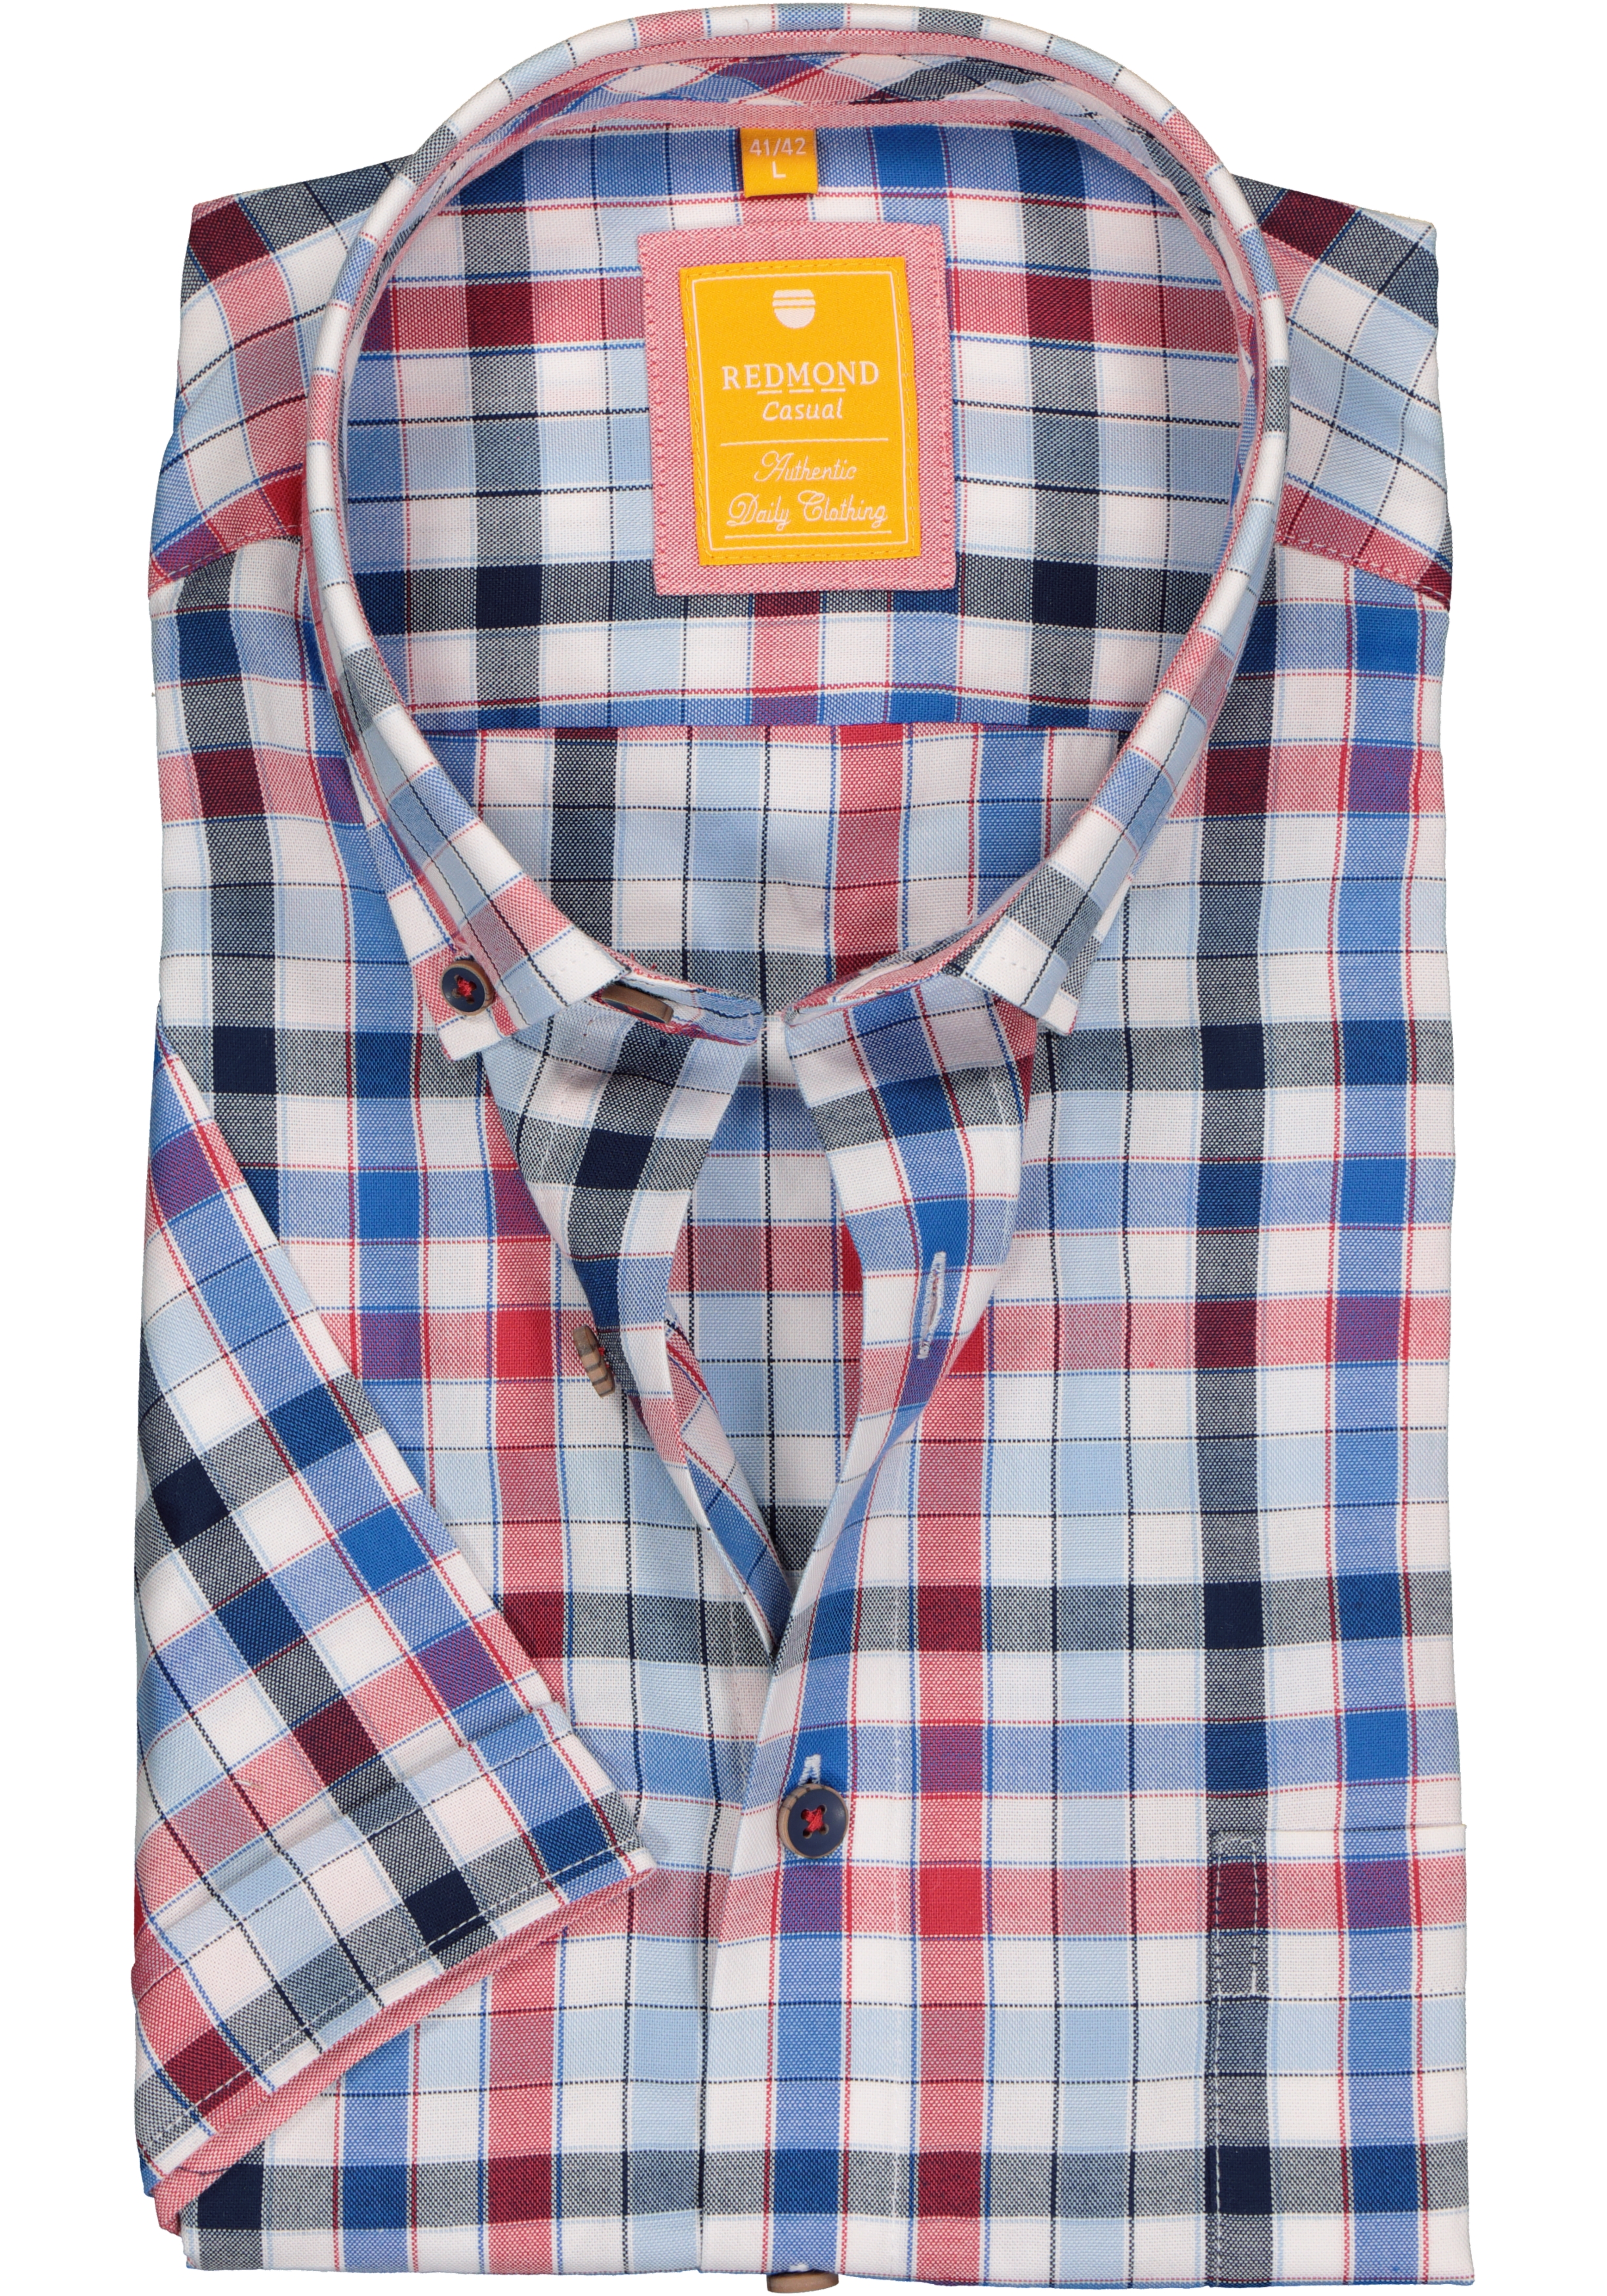 toewijzing Word gek Golf Redmond modern fit overhemd, korte mouw, Oxford, blauw, wit en rood geruit  - Zomer SALE tot 50% korting